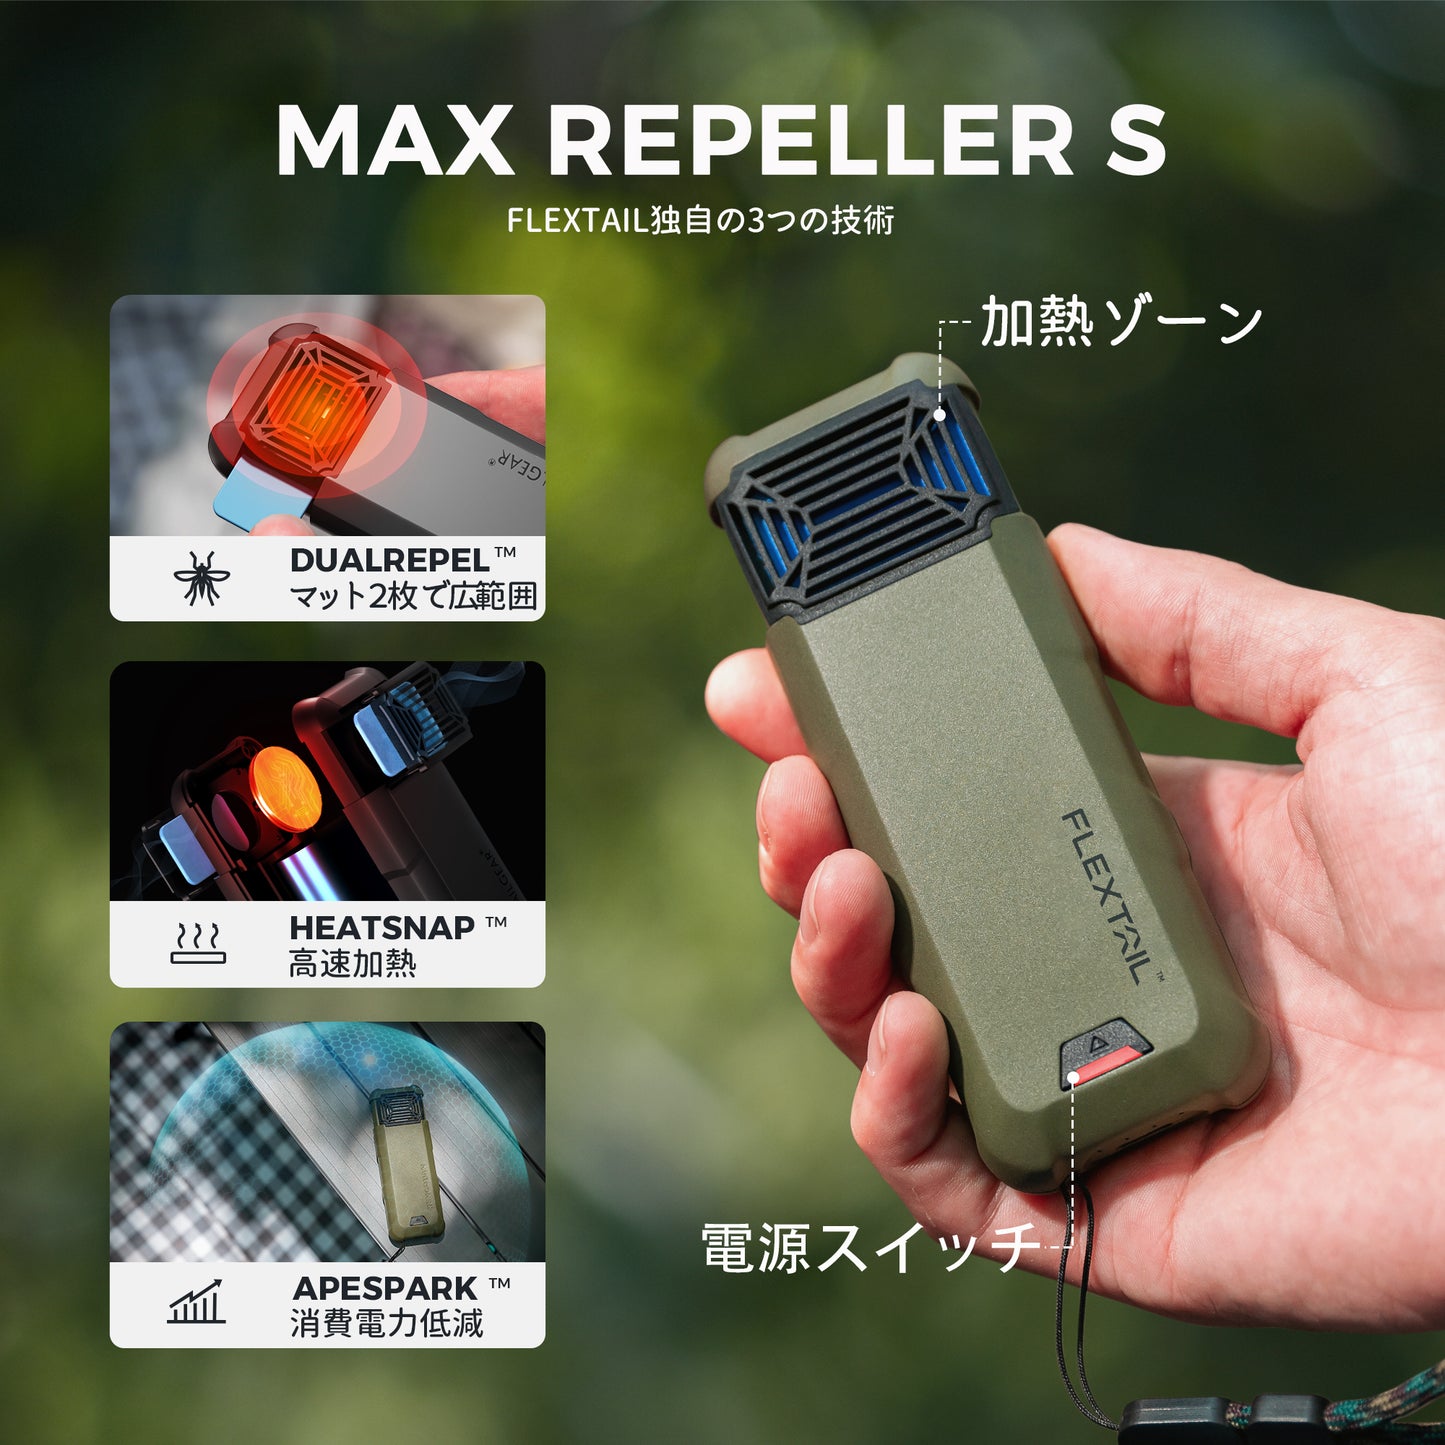 FLEXTAIL MAX REPELLER S（マックスリペラー）-モバイルバッテリーとしても使える電気加熱式蚊よけ器